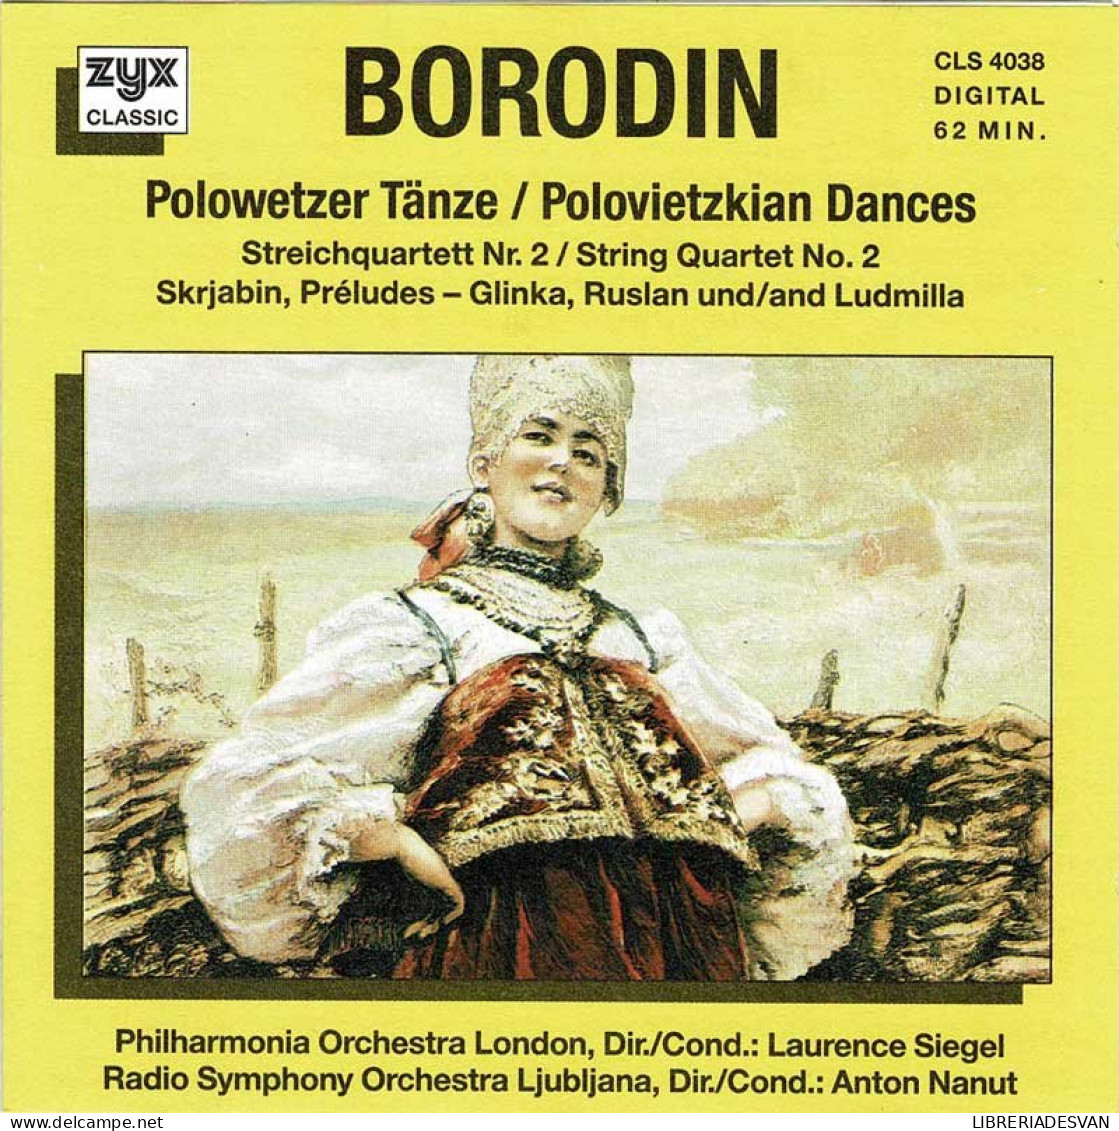 Borodin - Polovietzkian Dances. CD - Klassik